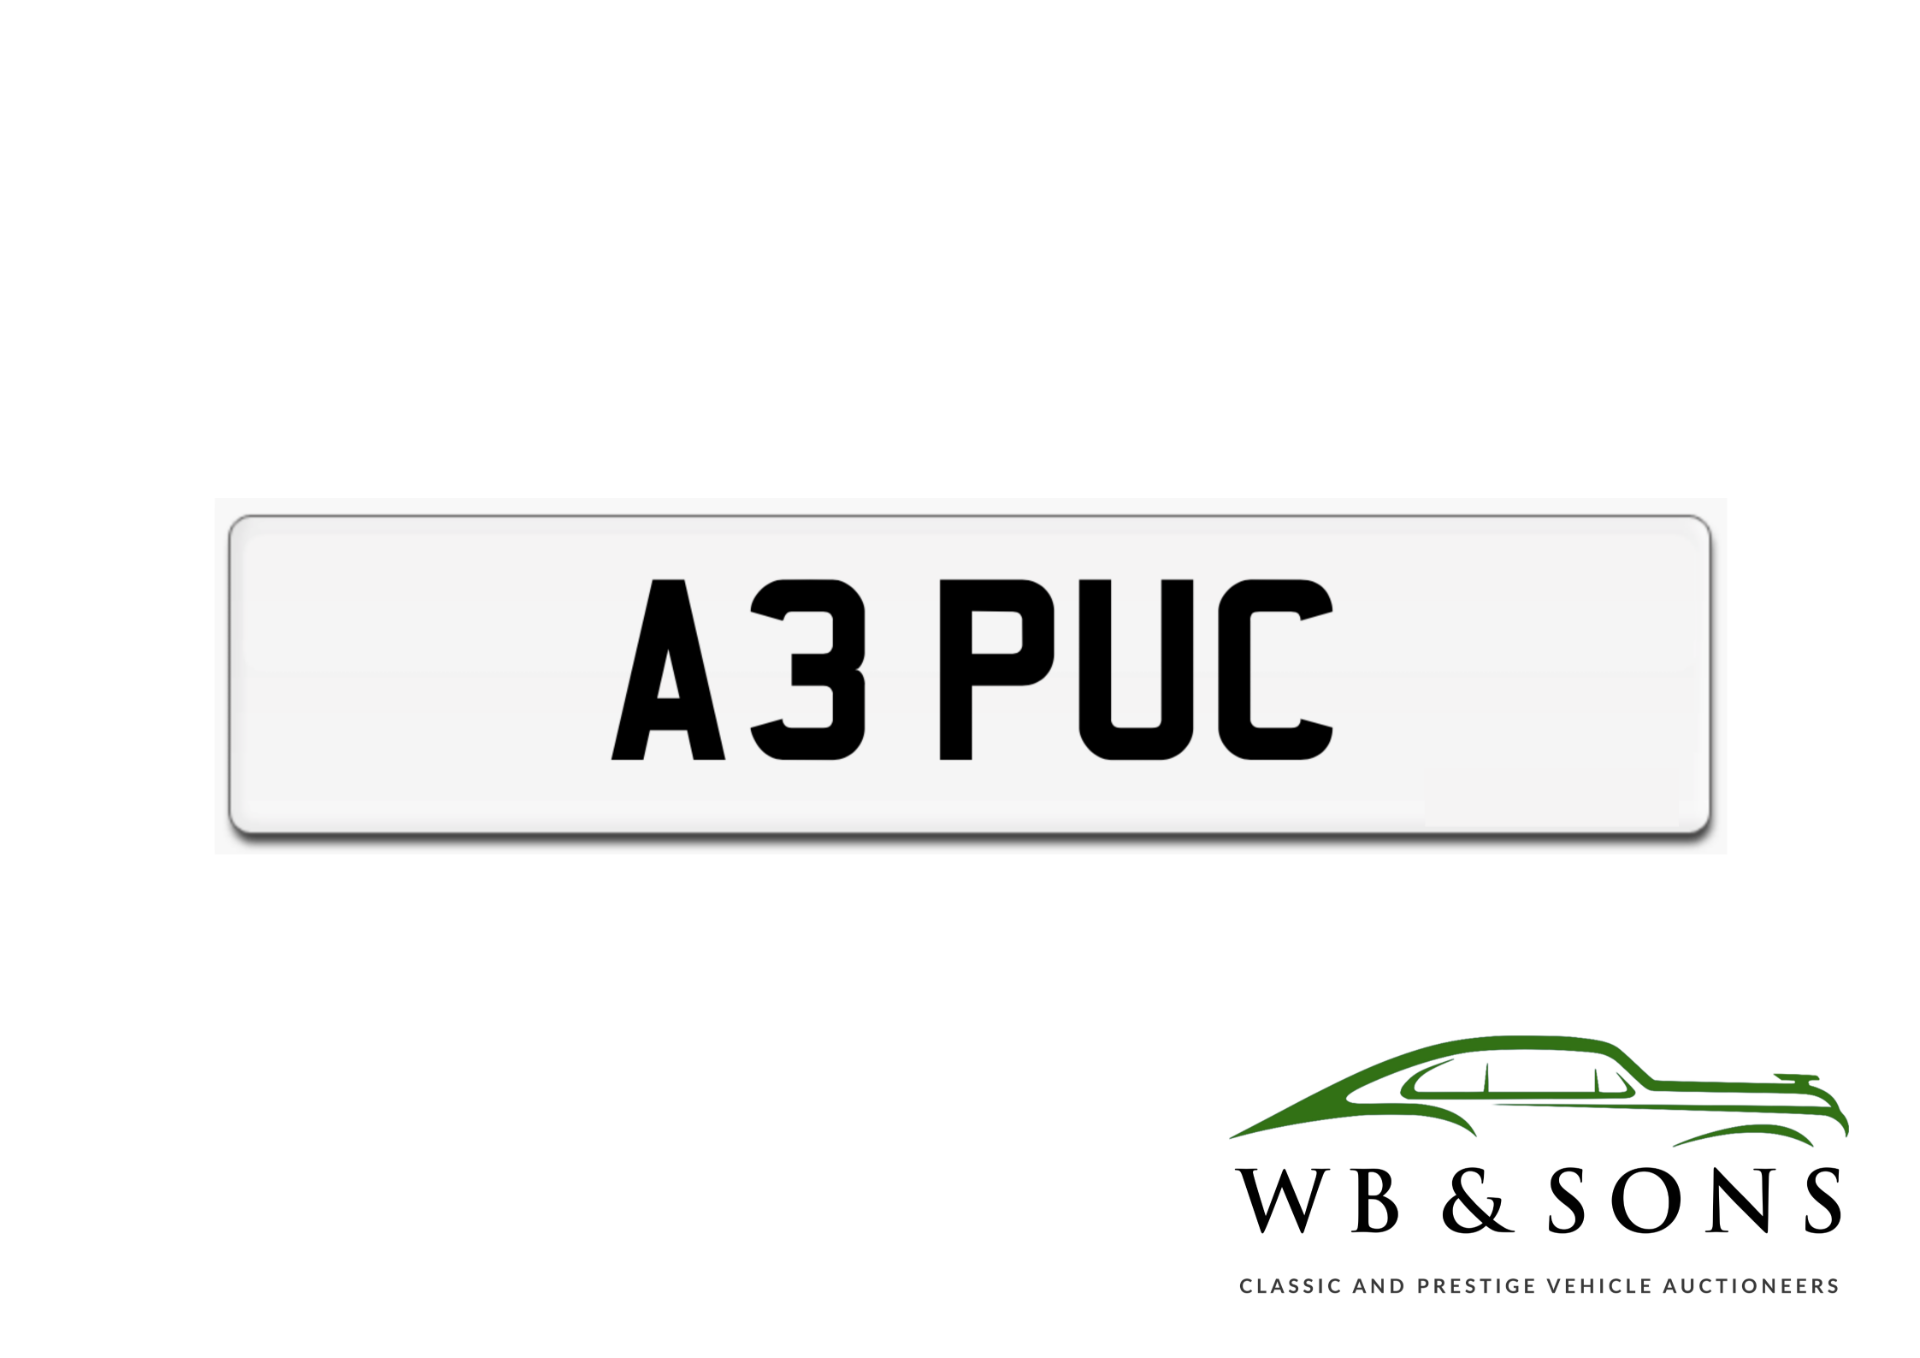 Registration - A3 PUC